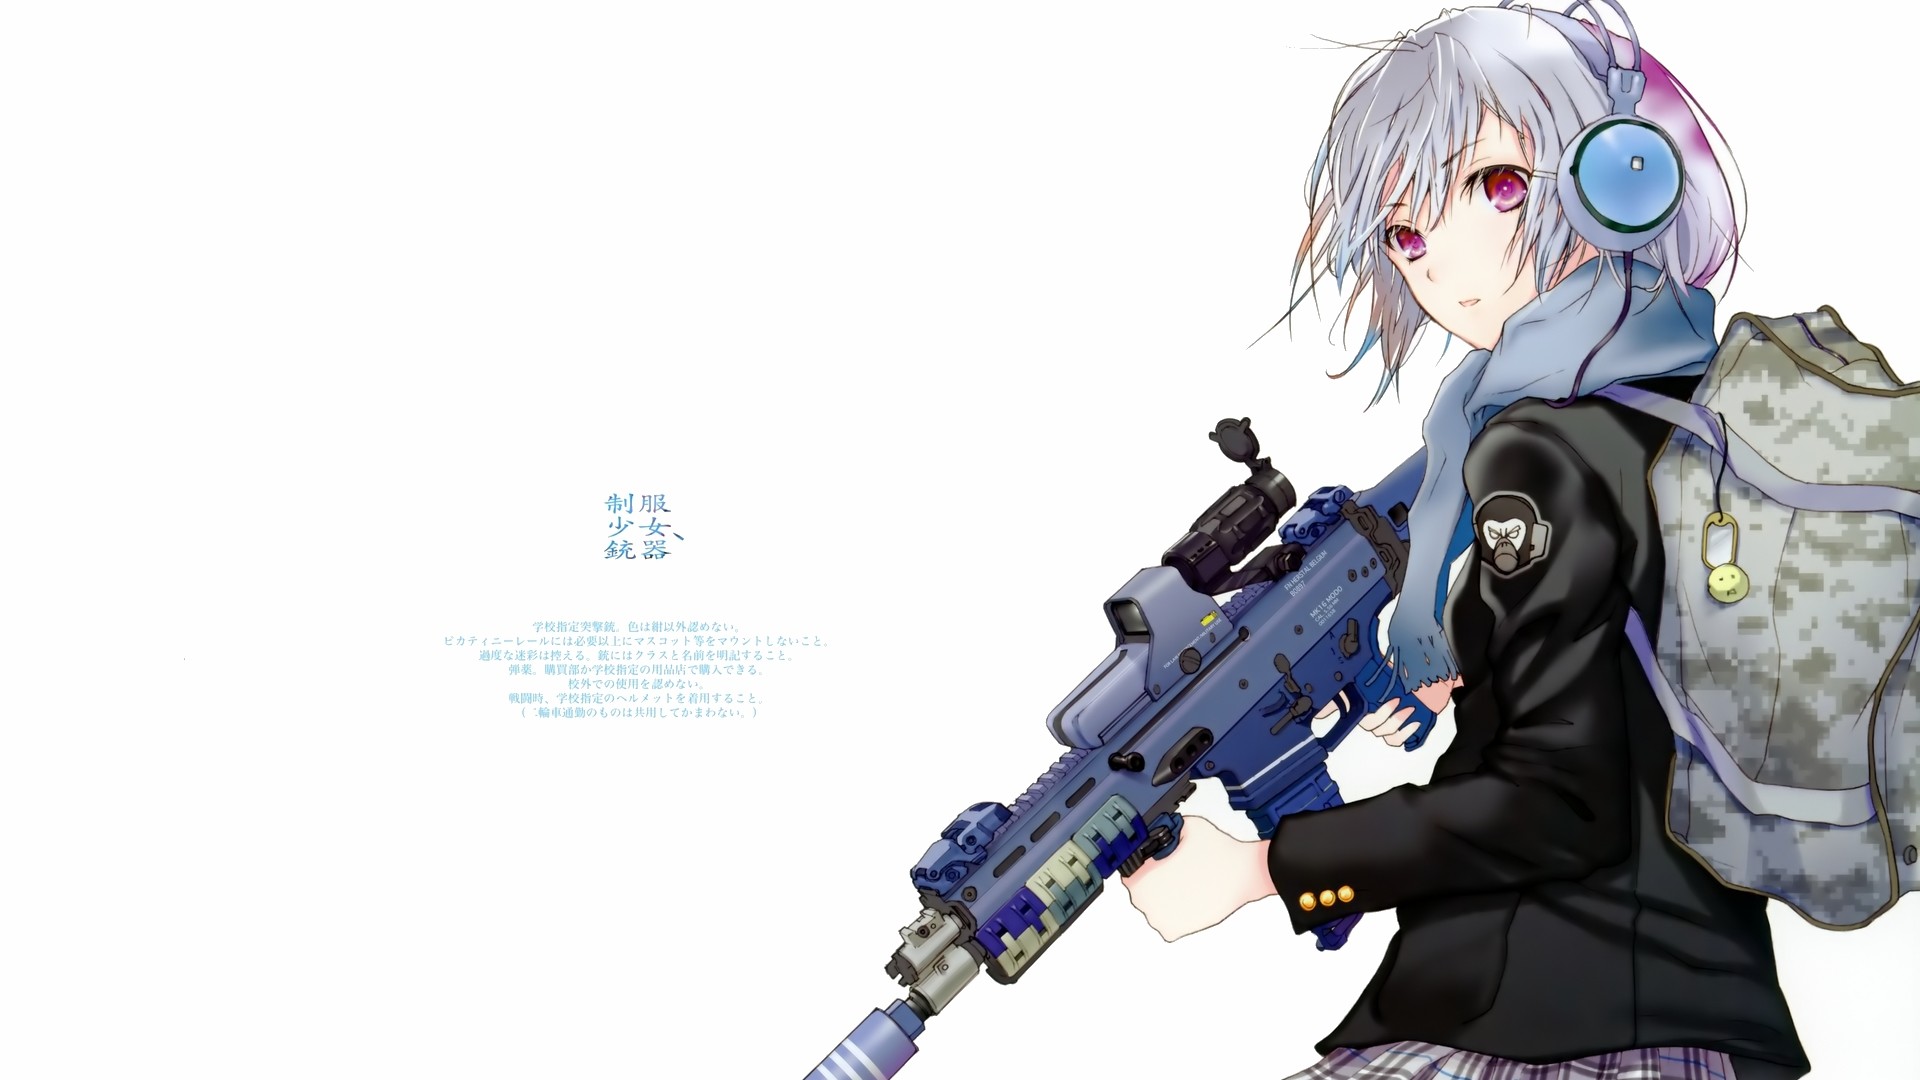 #Anime girls with #guns anime gun Pinterest Anime